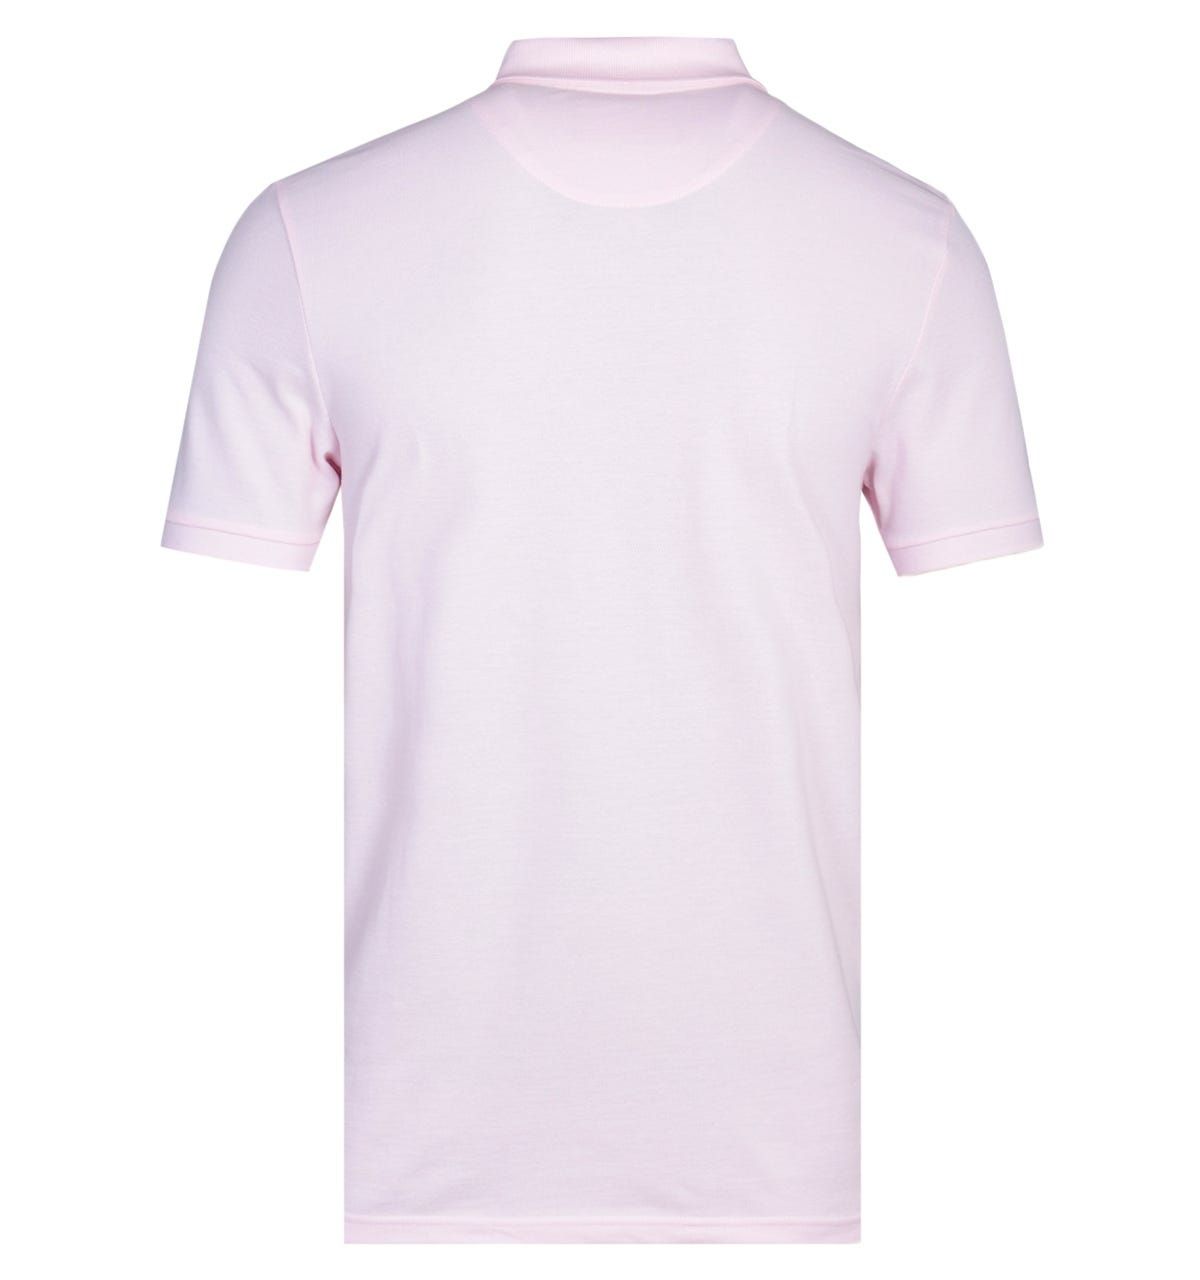 <p>Style & Fit:</p><ul><li>This polo shirt fits true to size, please select your usual size.</li></ul><p>Fabric Composition & Care:</p><ul><li>100% Cotton</li><li>Machine Washable</li></ul>